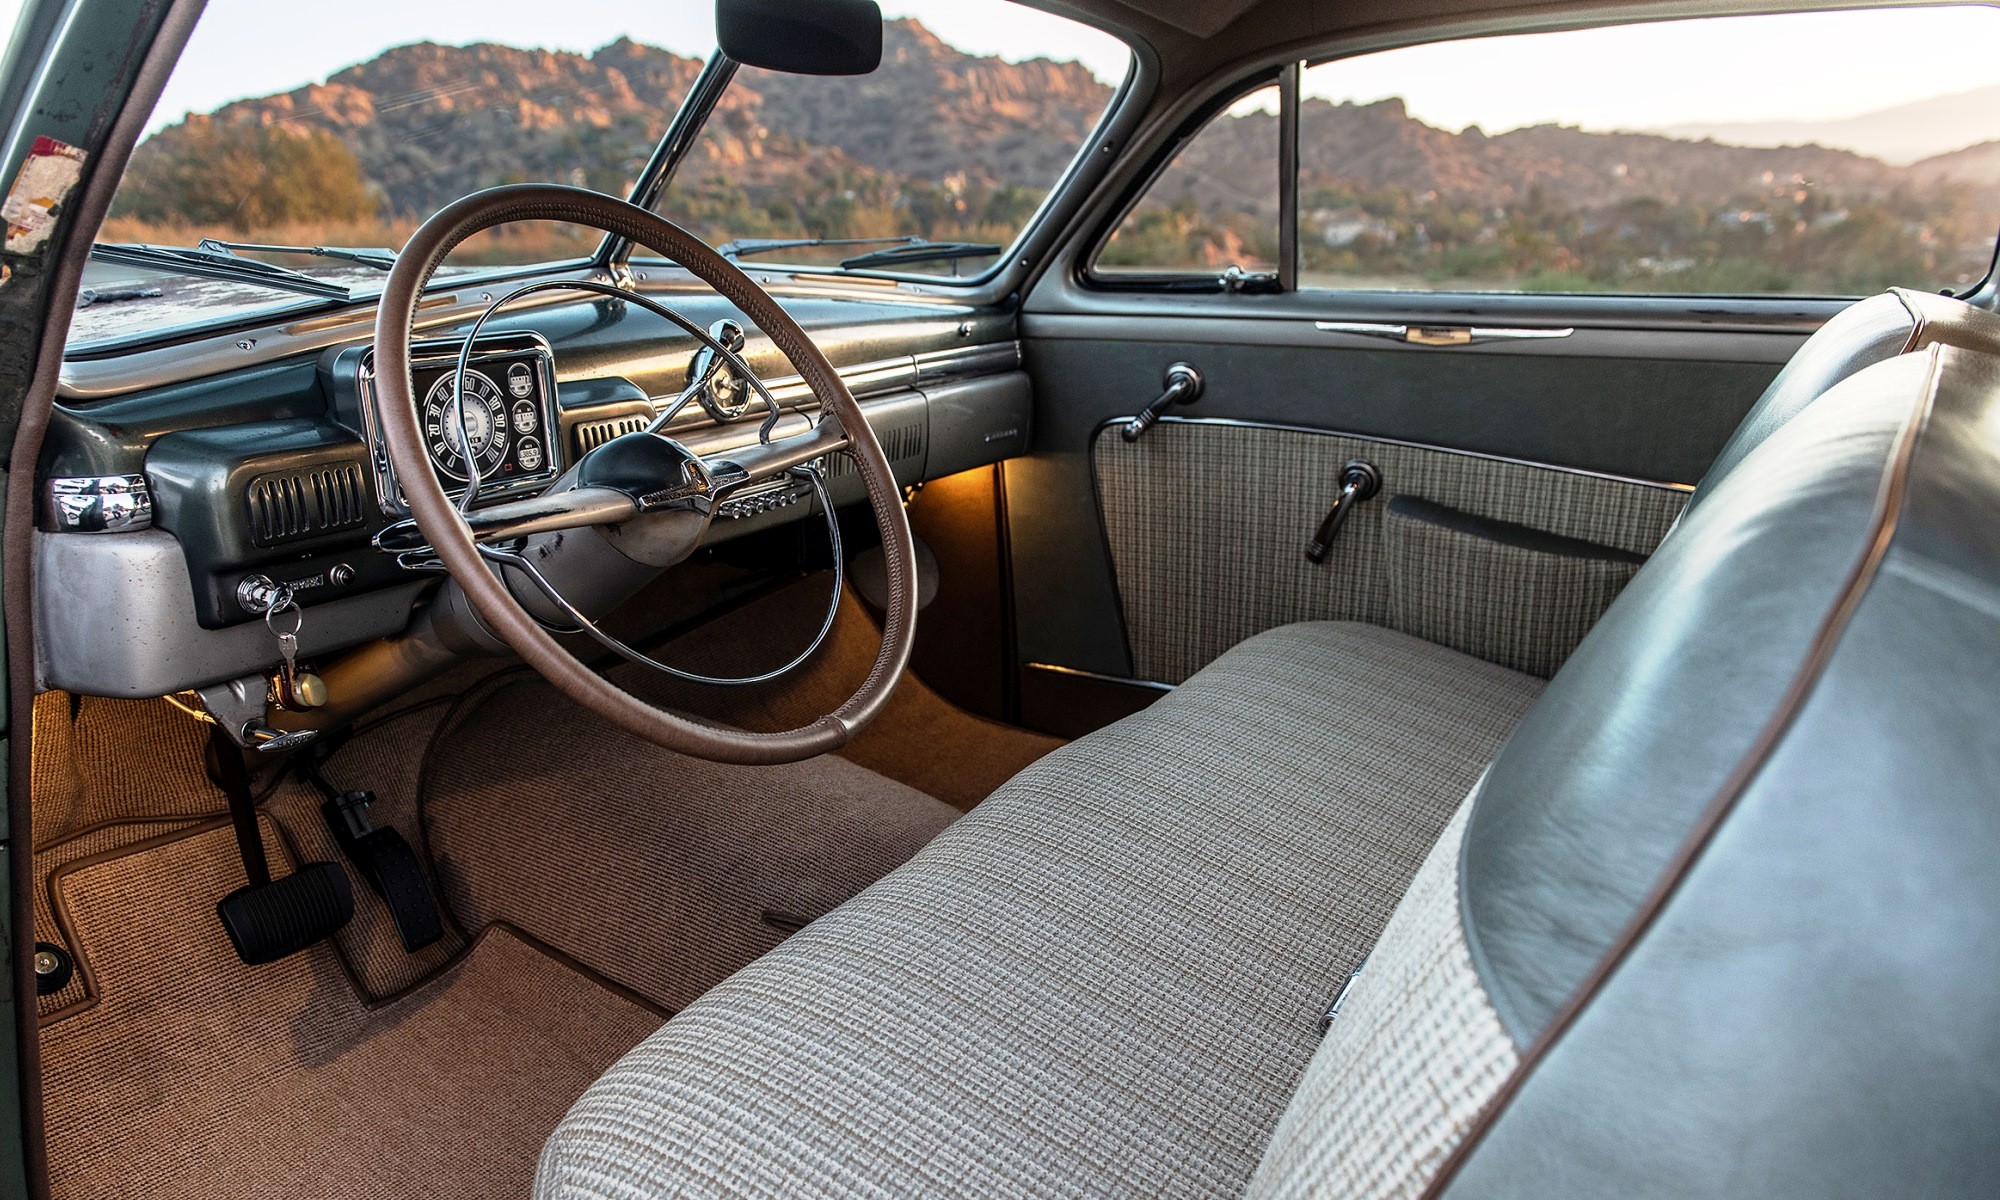 Icon Derelict 1949 Mercury Coupe interior